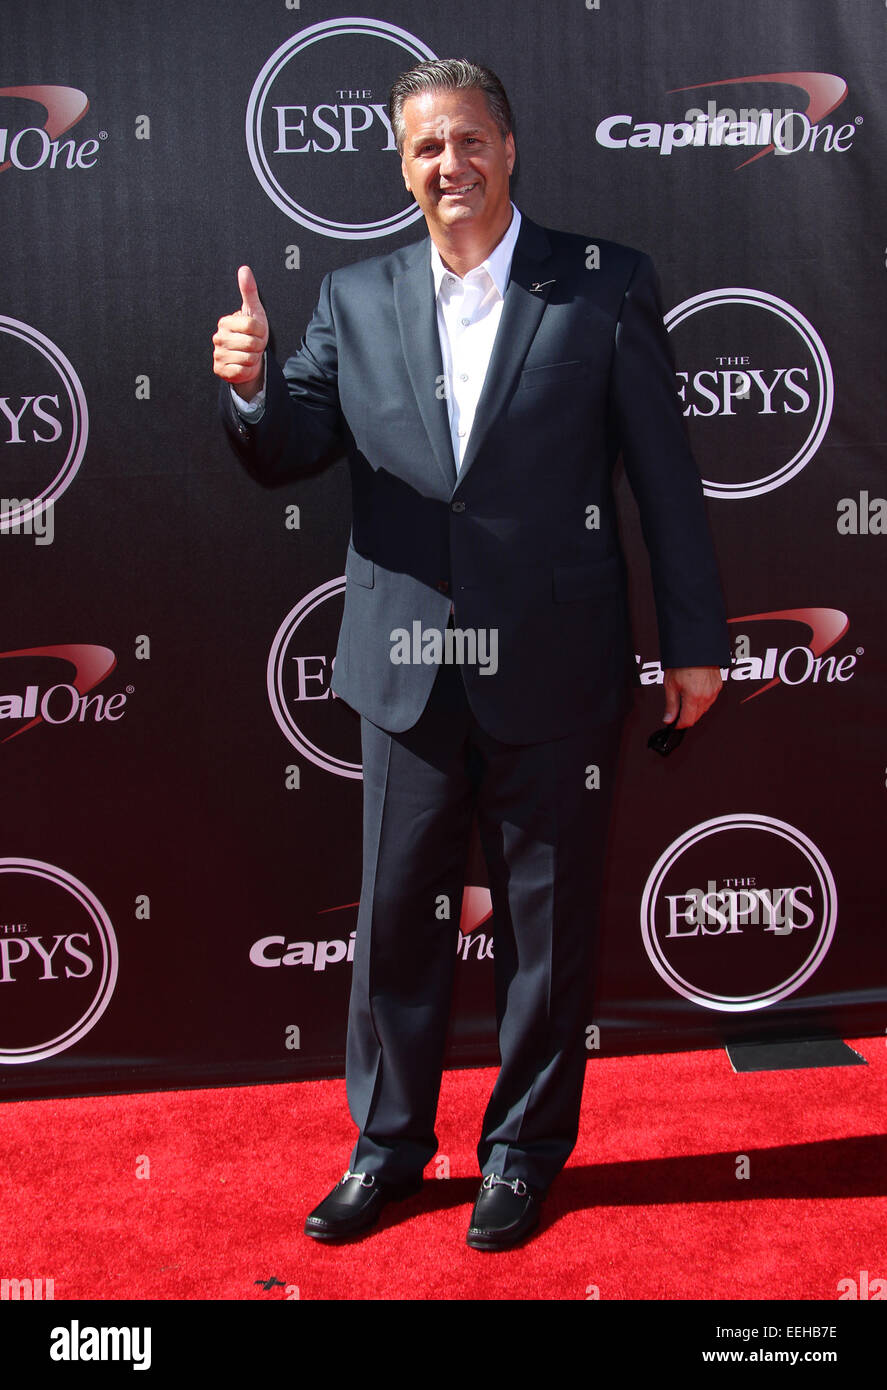 2014 ESPYS Awards - Arrivals  Featuring: John Calipari Where: Los Angeles, California, United States When: 16 Jul 2014 Stock Photo